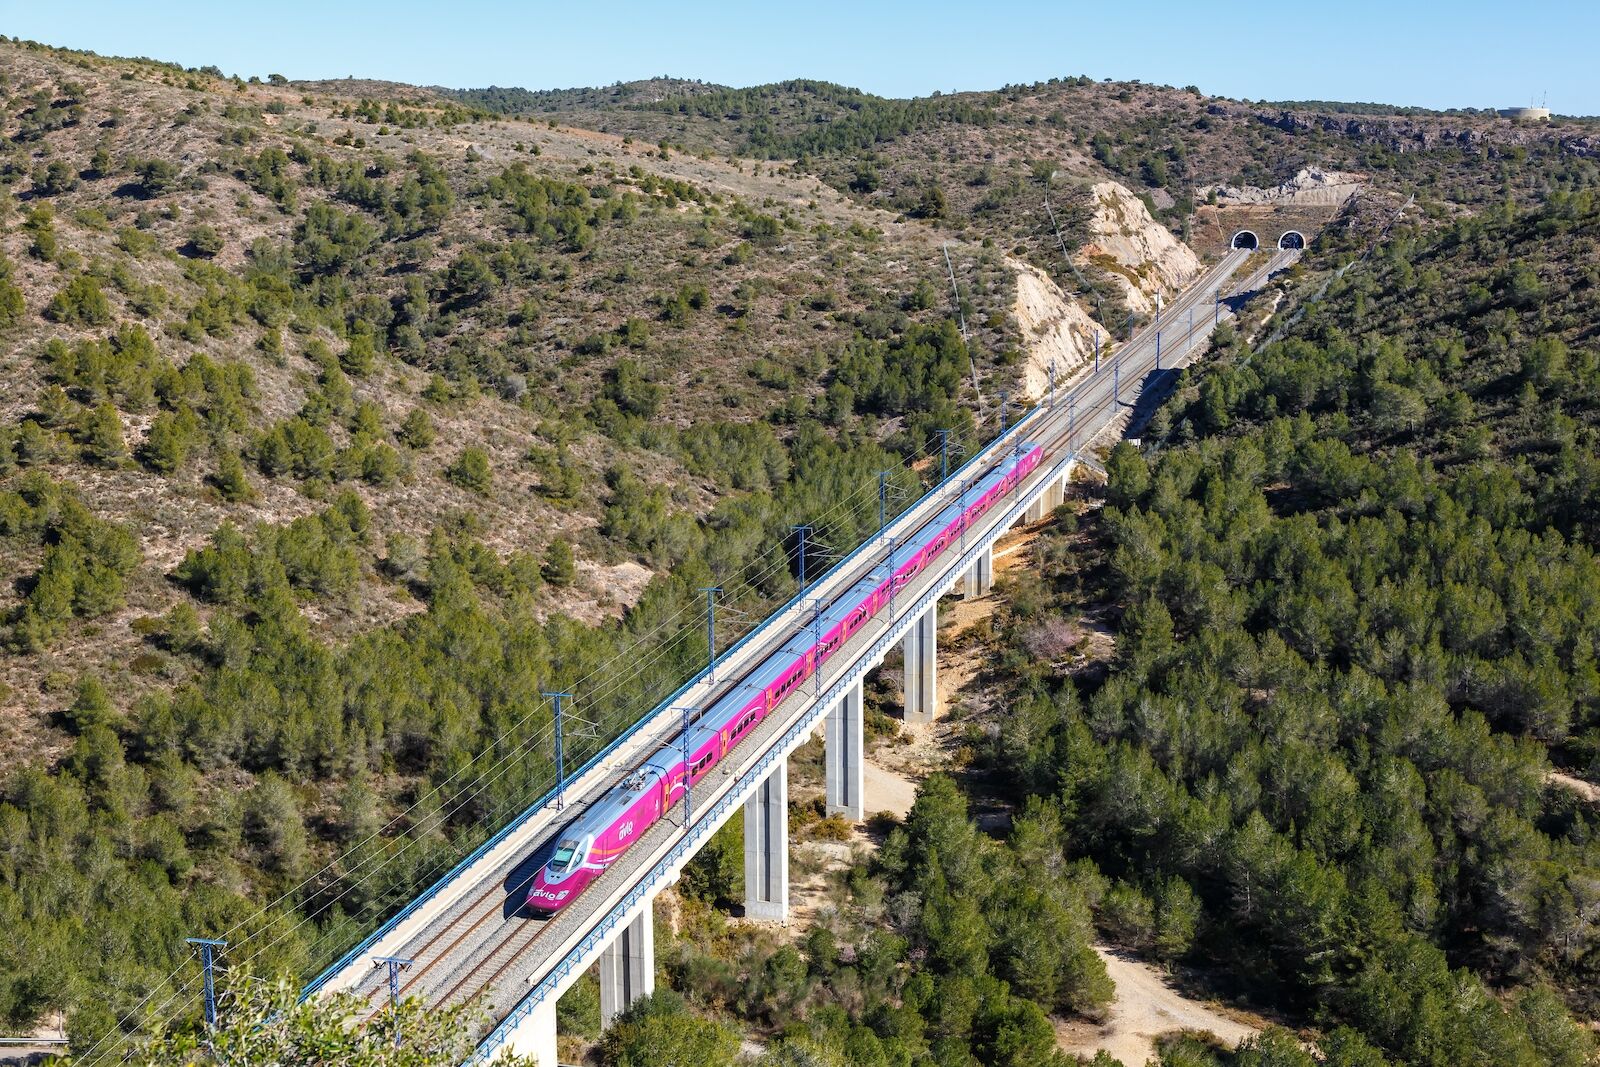 AVLO train that runs between Madrid and Barcelona on a bridge